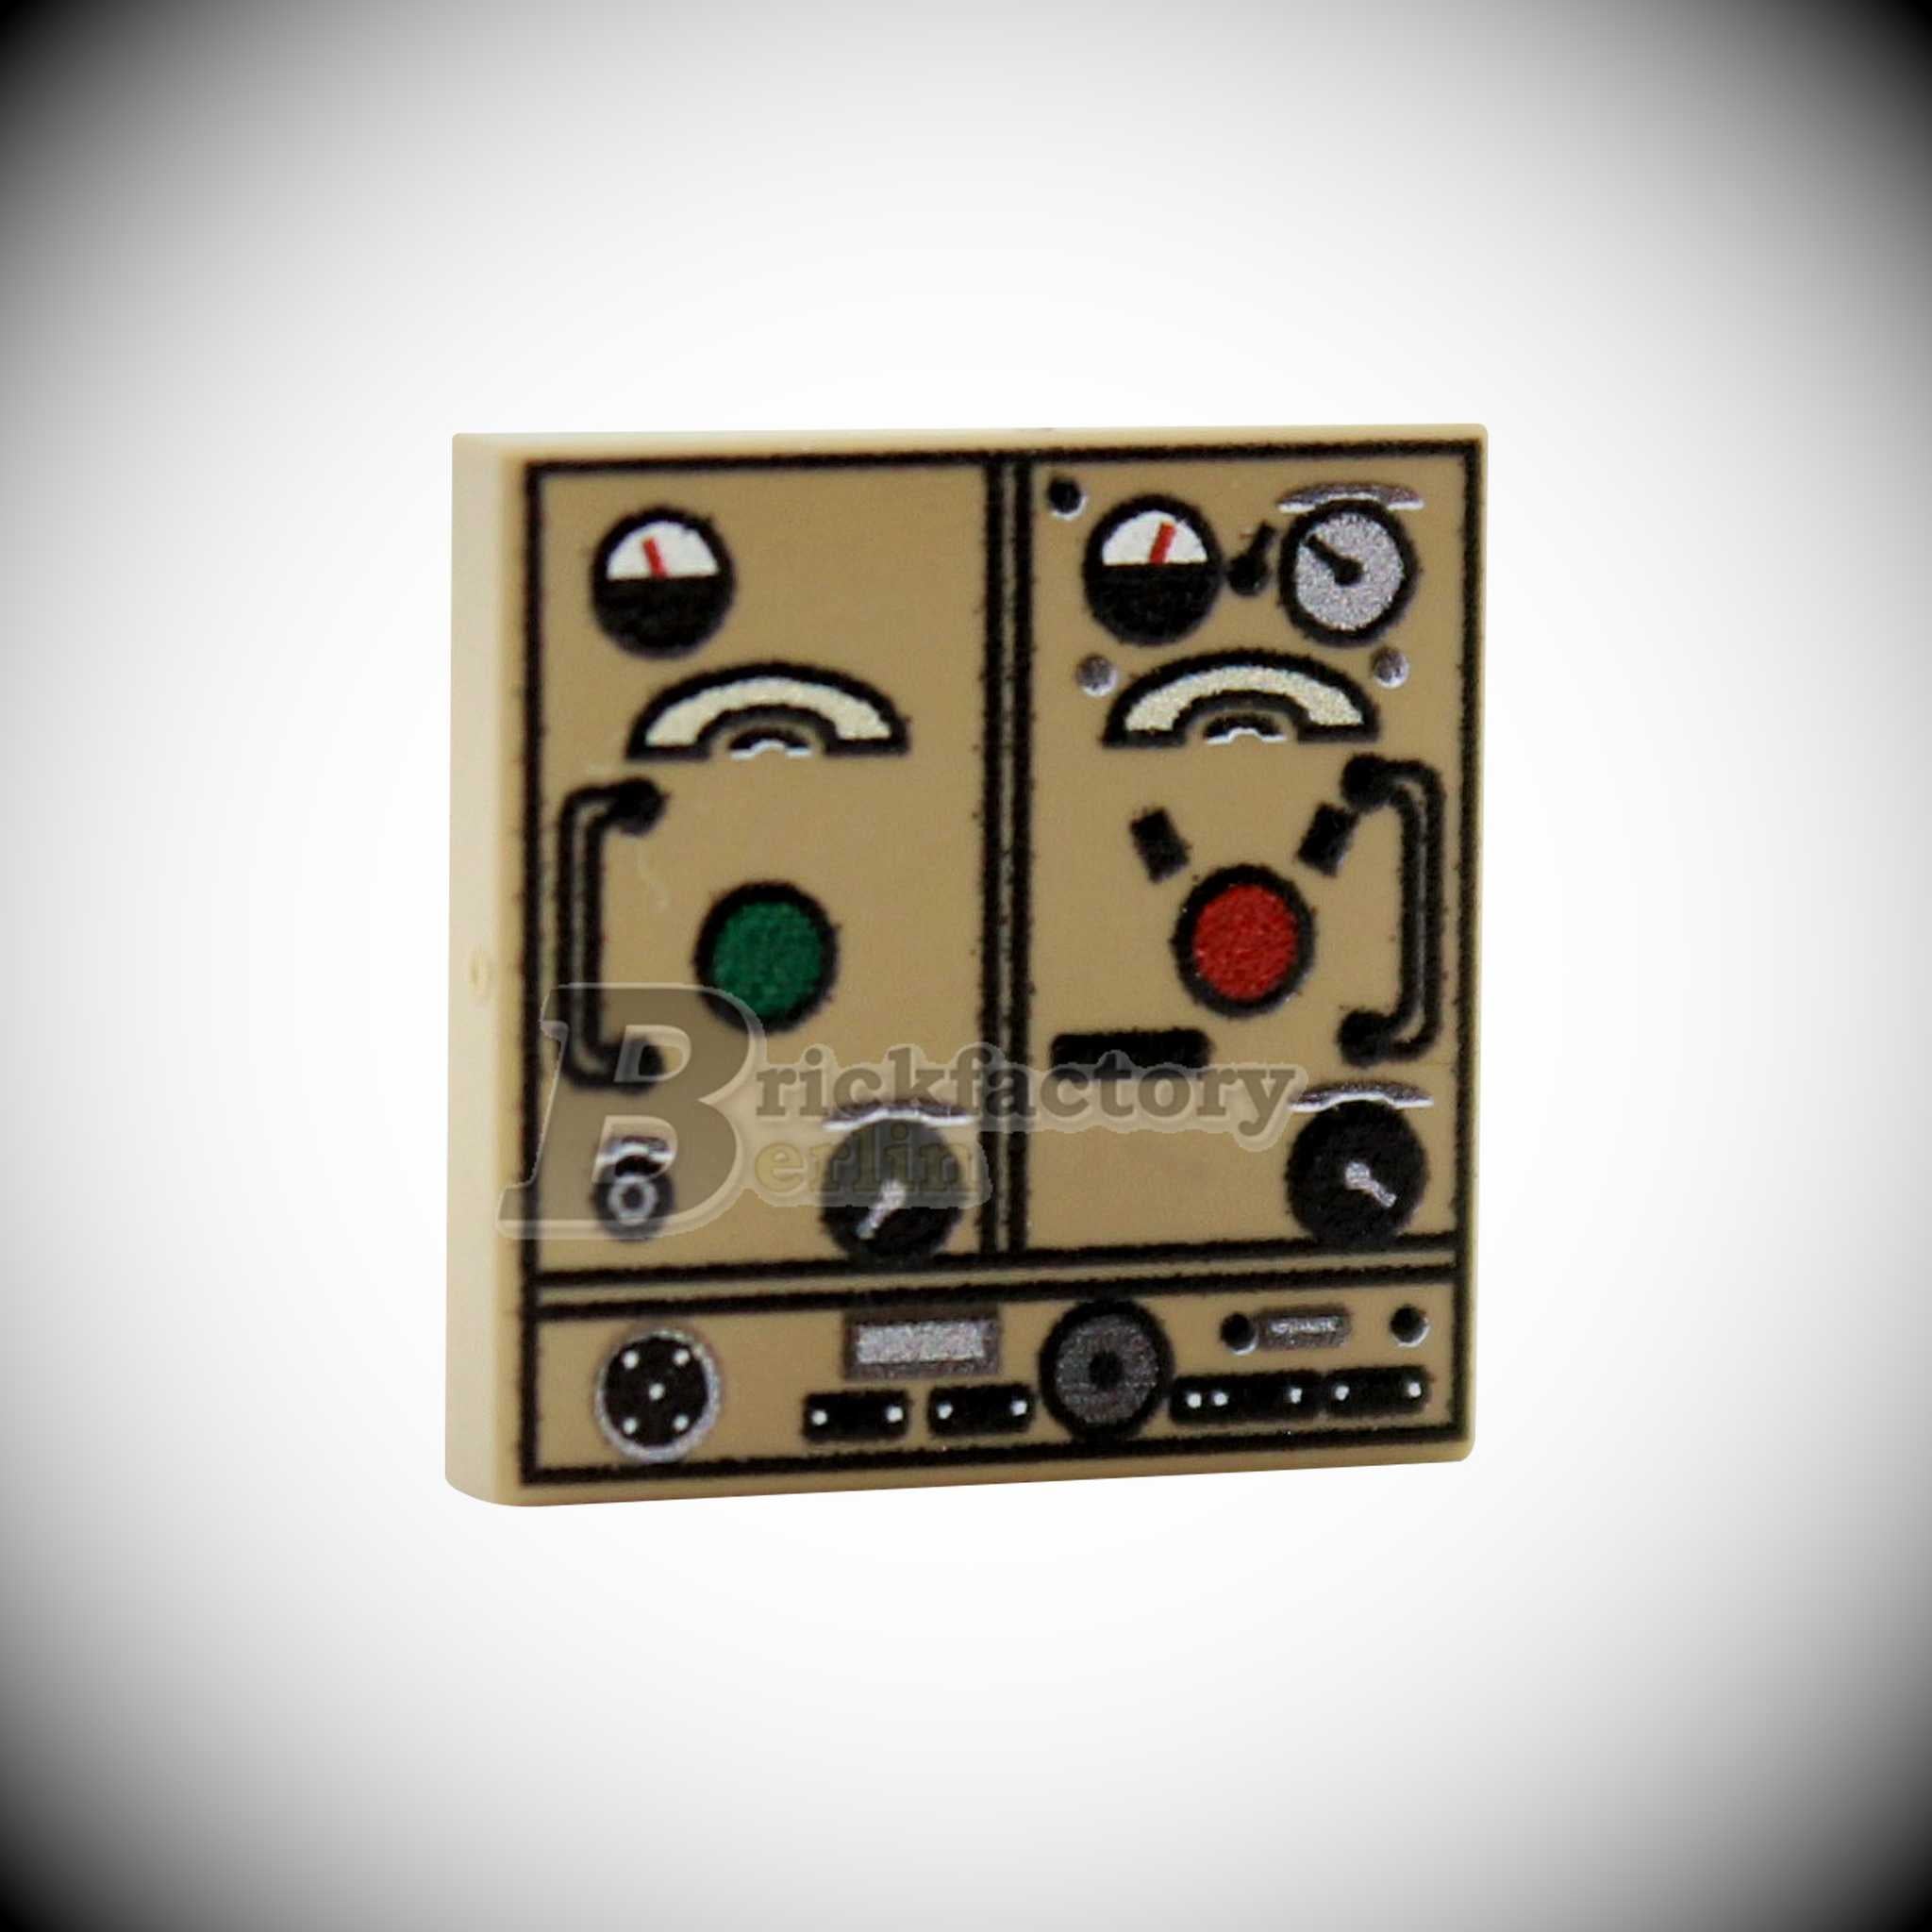 BF-0414A - Backpack Radio b1 Torn.Fu.b1 (Color: Darktan, Printed LEGO® Tile 2x2)